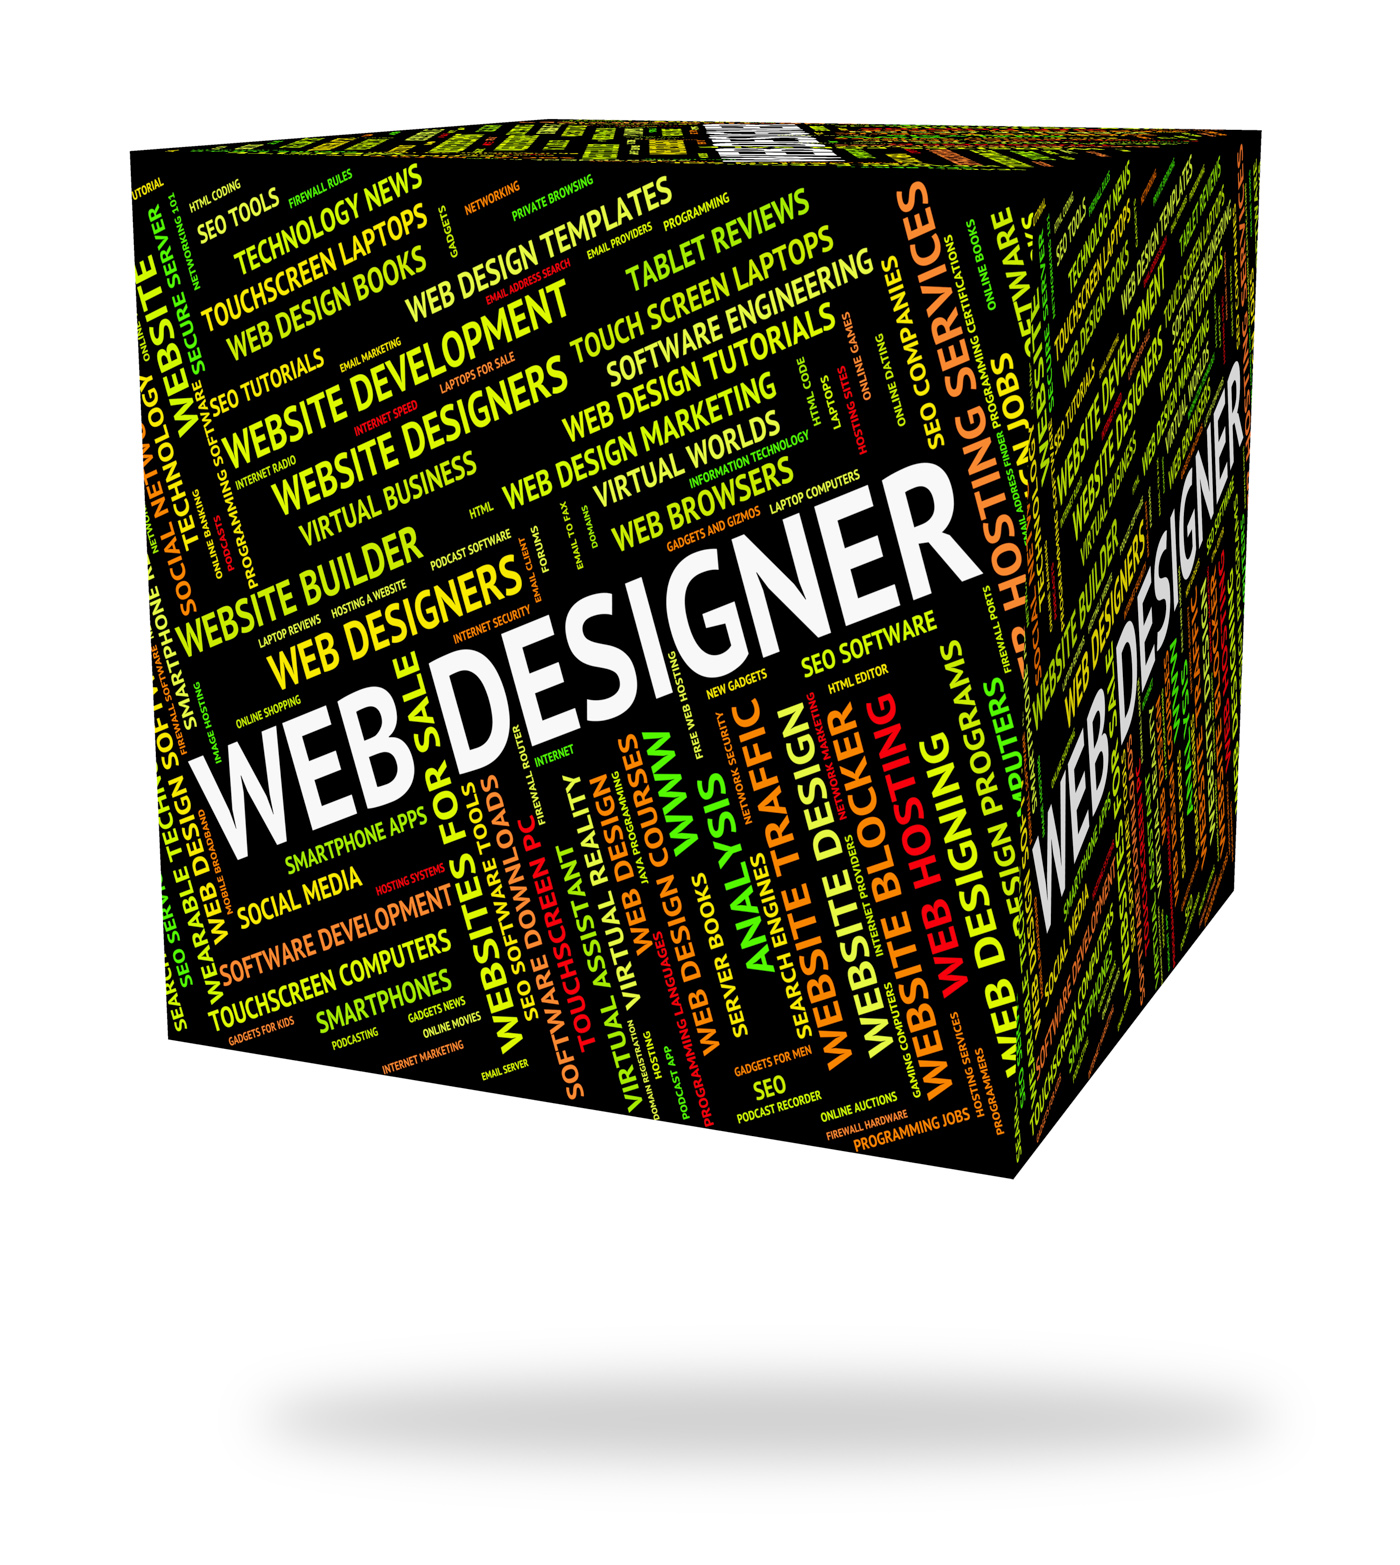 Web designer shows words designing and net photo